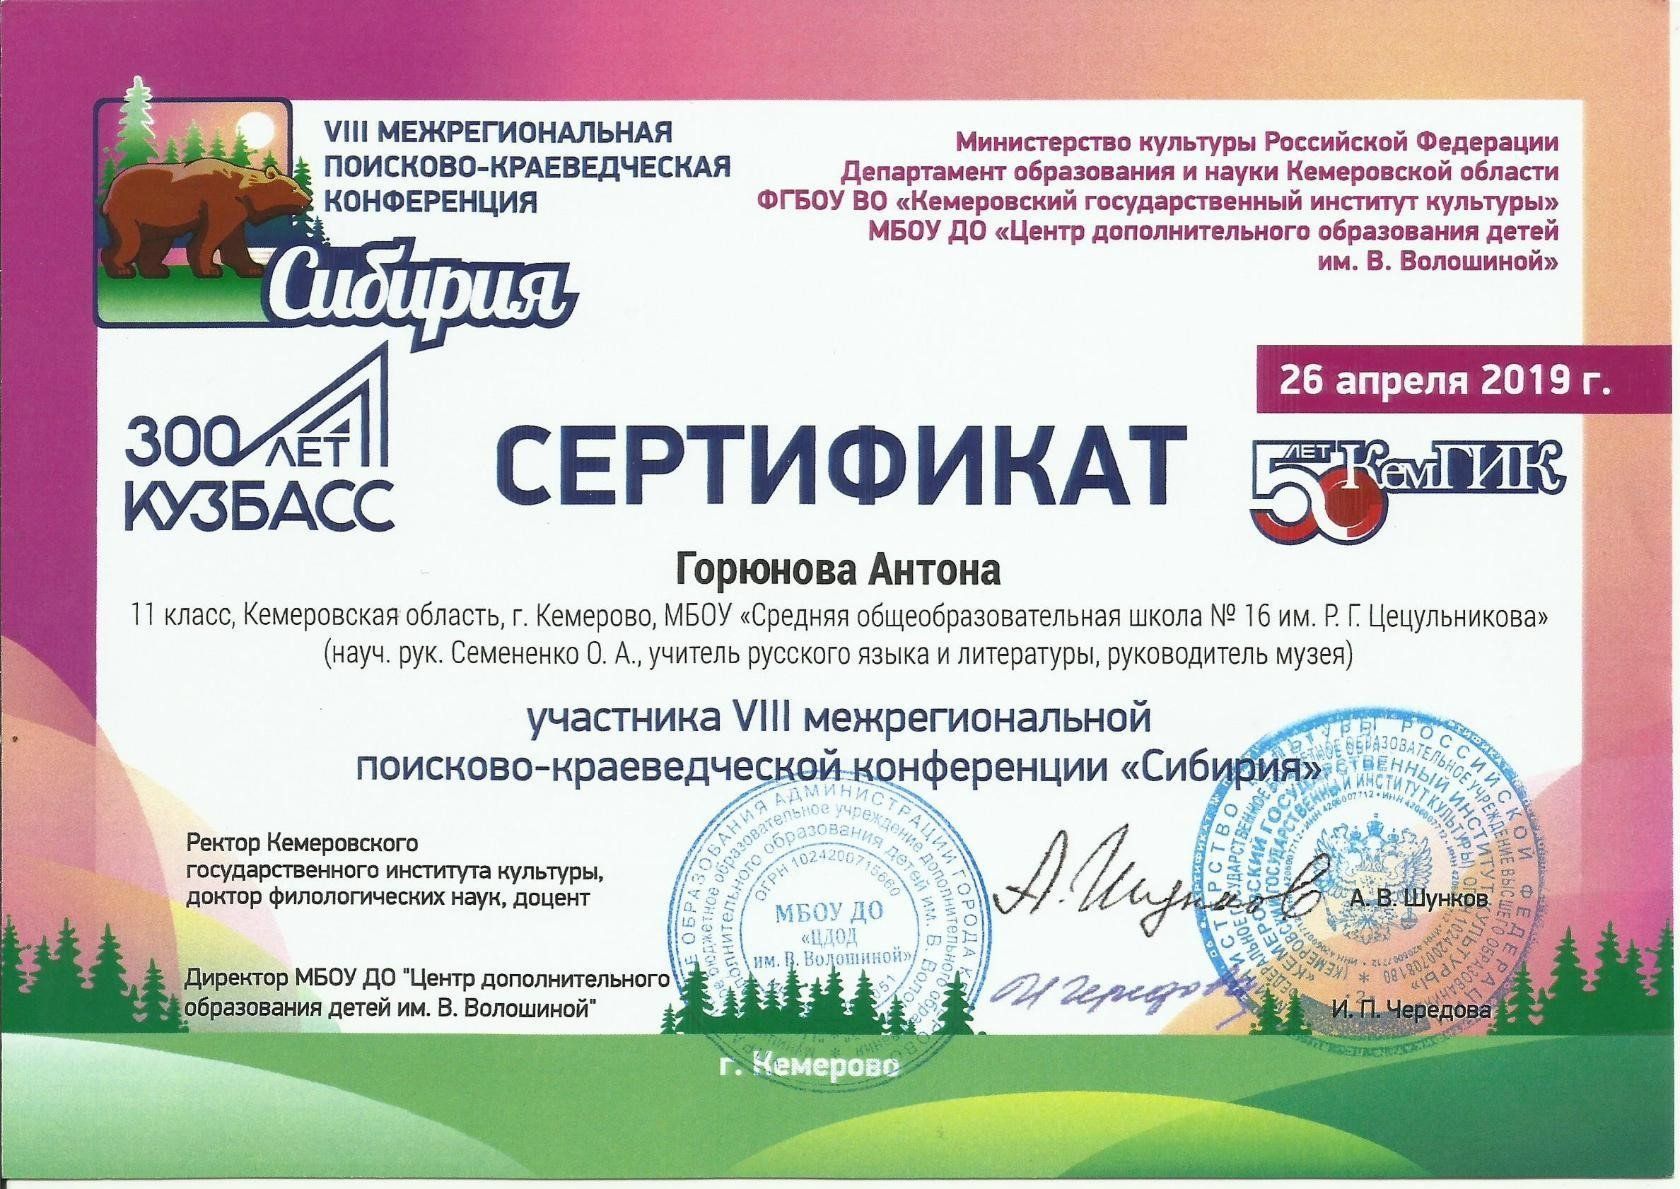 Горюнов А., 2019, Сибирия, сертификат